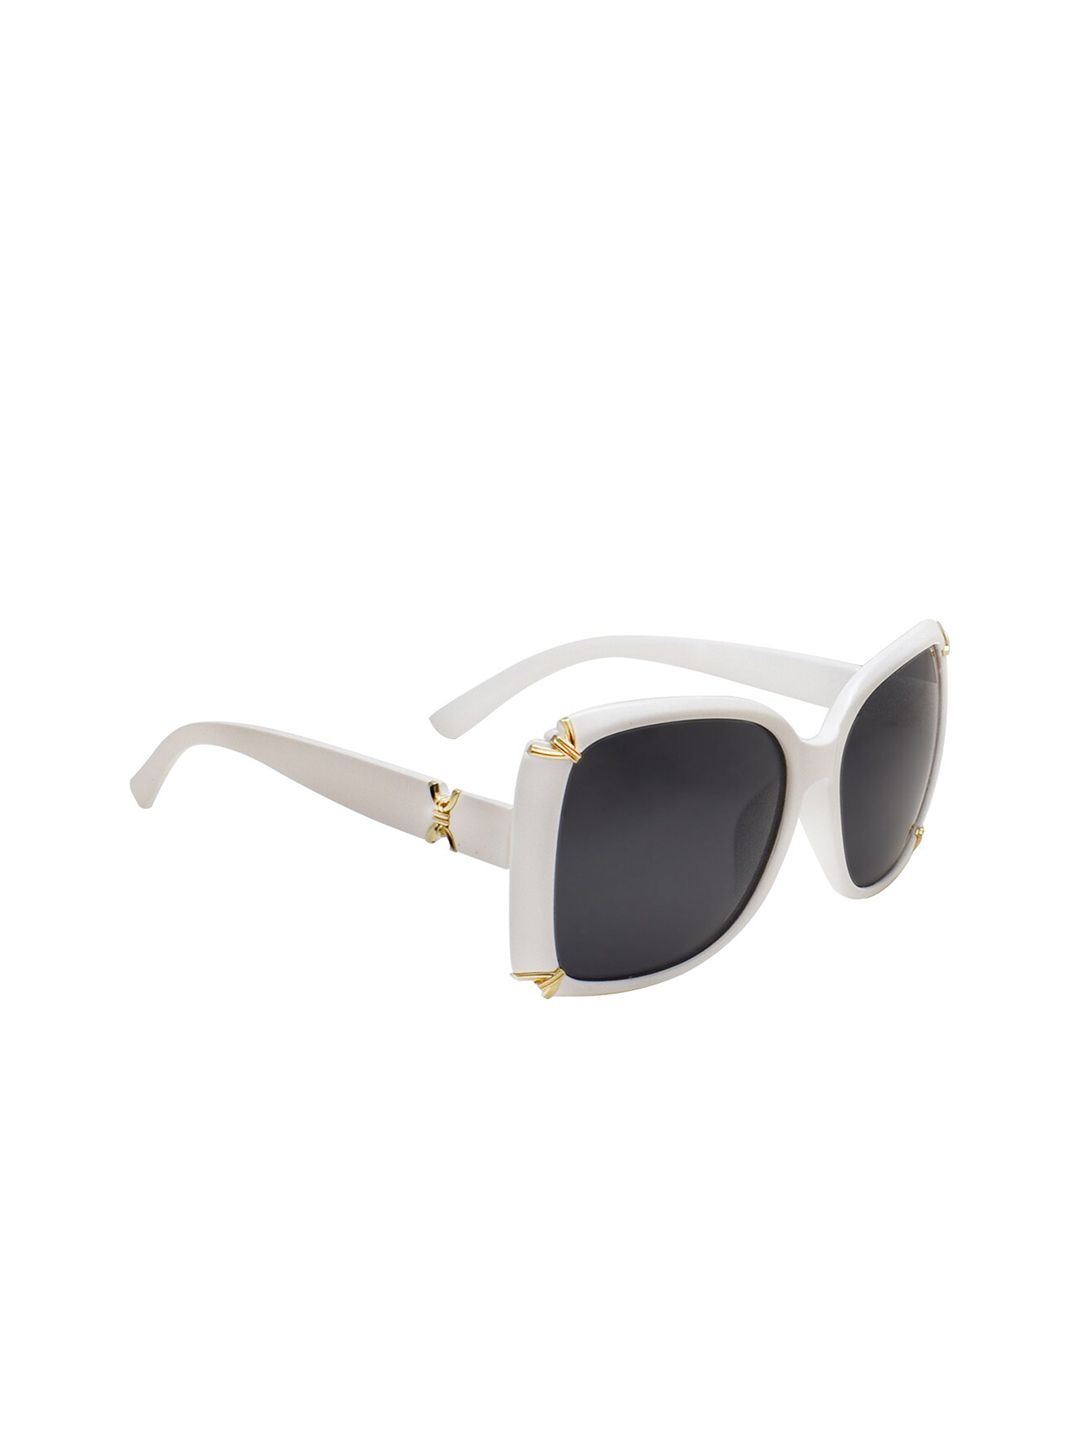 Peter Jones Eyewear Women Black Lens & White Oversized Sunglasses UV Protected PO092W Price in India